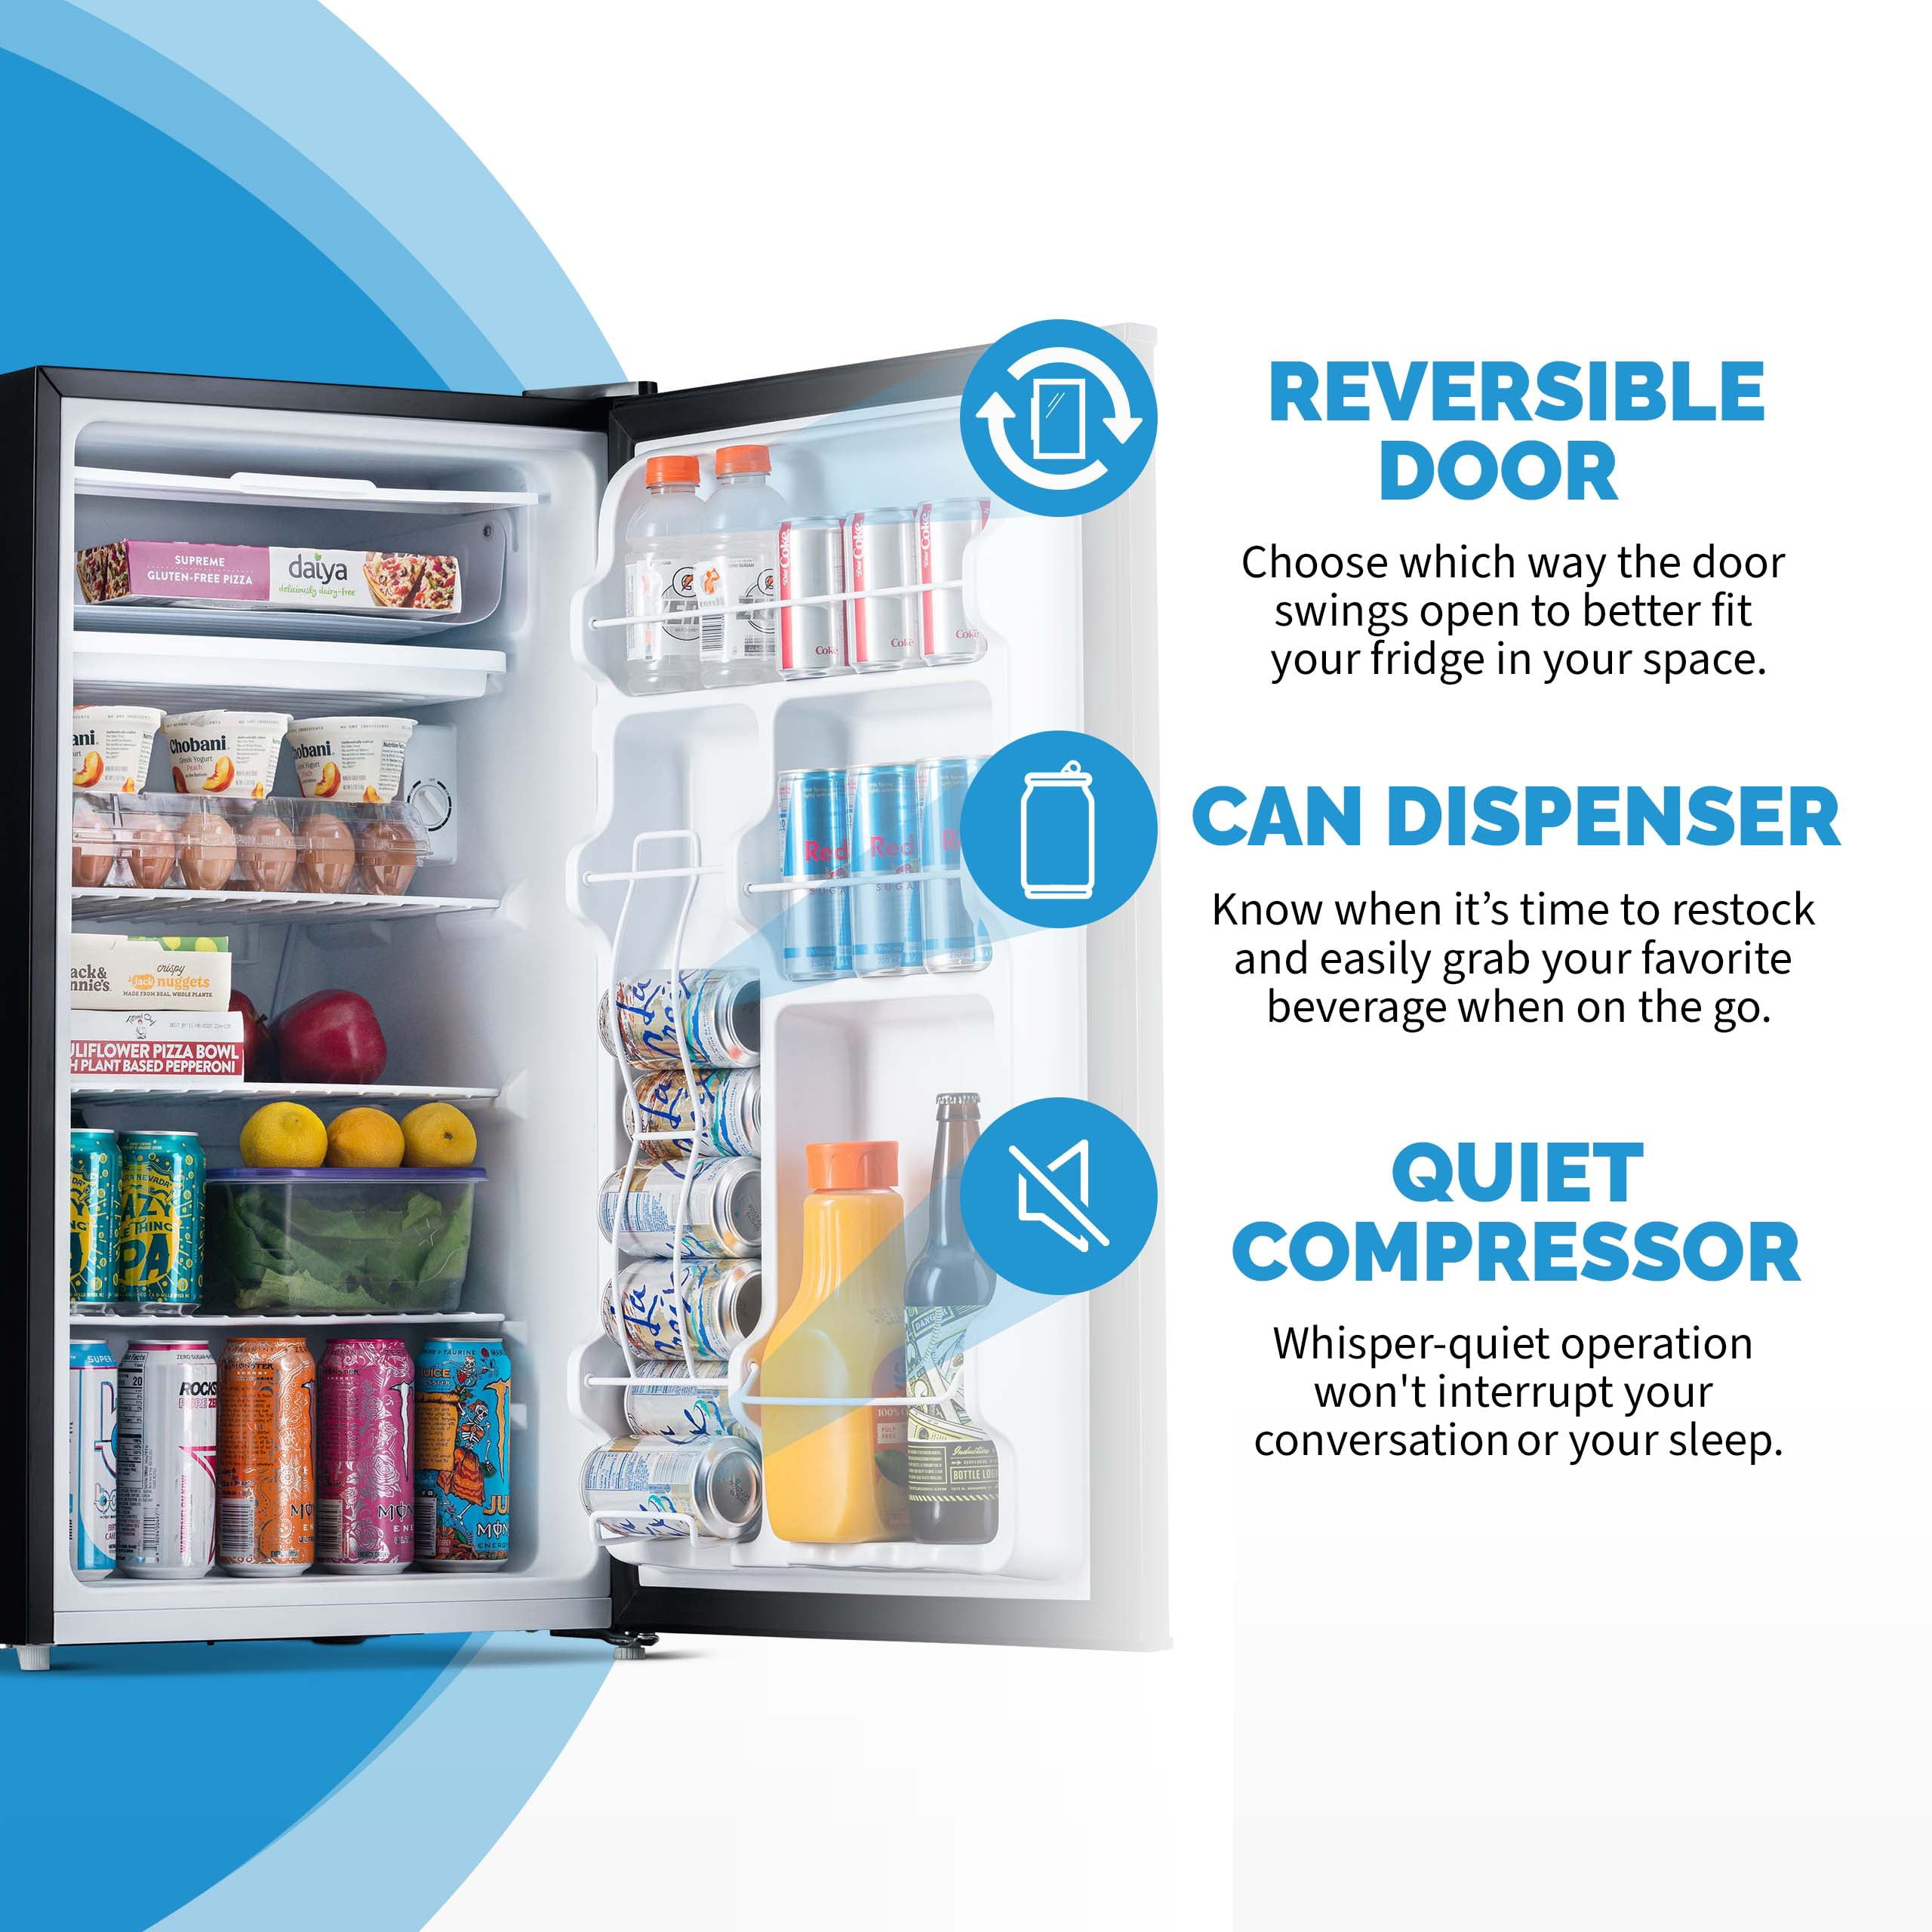 Newair 3.1 Cu. Ft. Black Compact Mini Refrigerator with Freezer